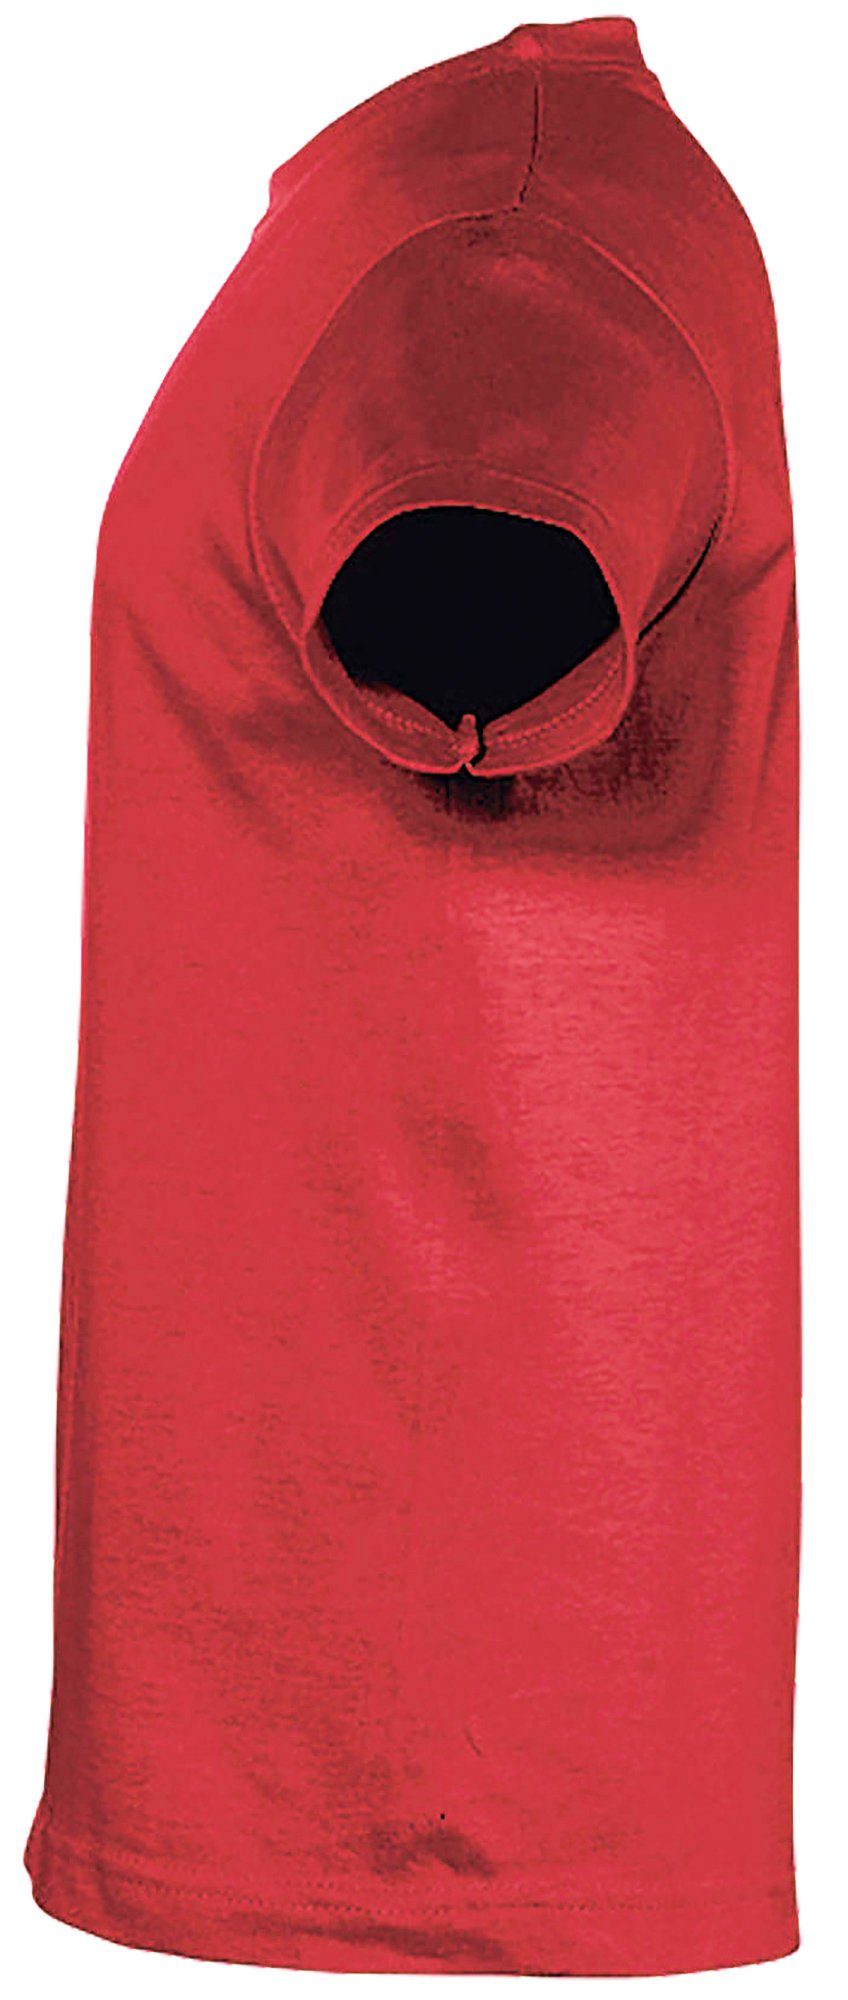 MyDesign24 Print-Shirt Kinder Hunde T-Shirt bedruckt Pfötchen mit Labrador - i234 rot Aufdruck, gibt Baumwollshirt